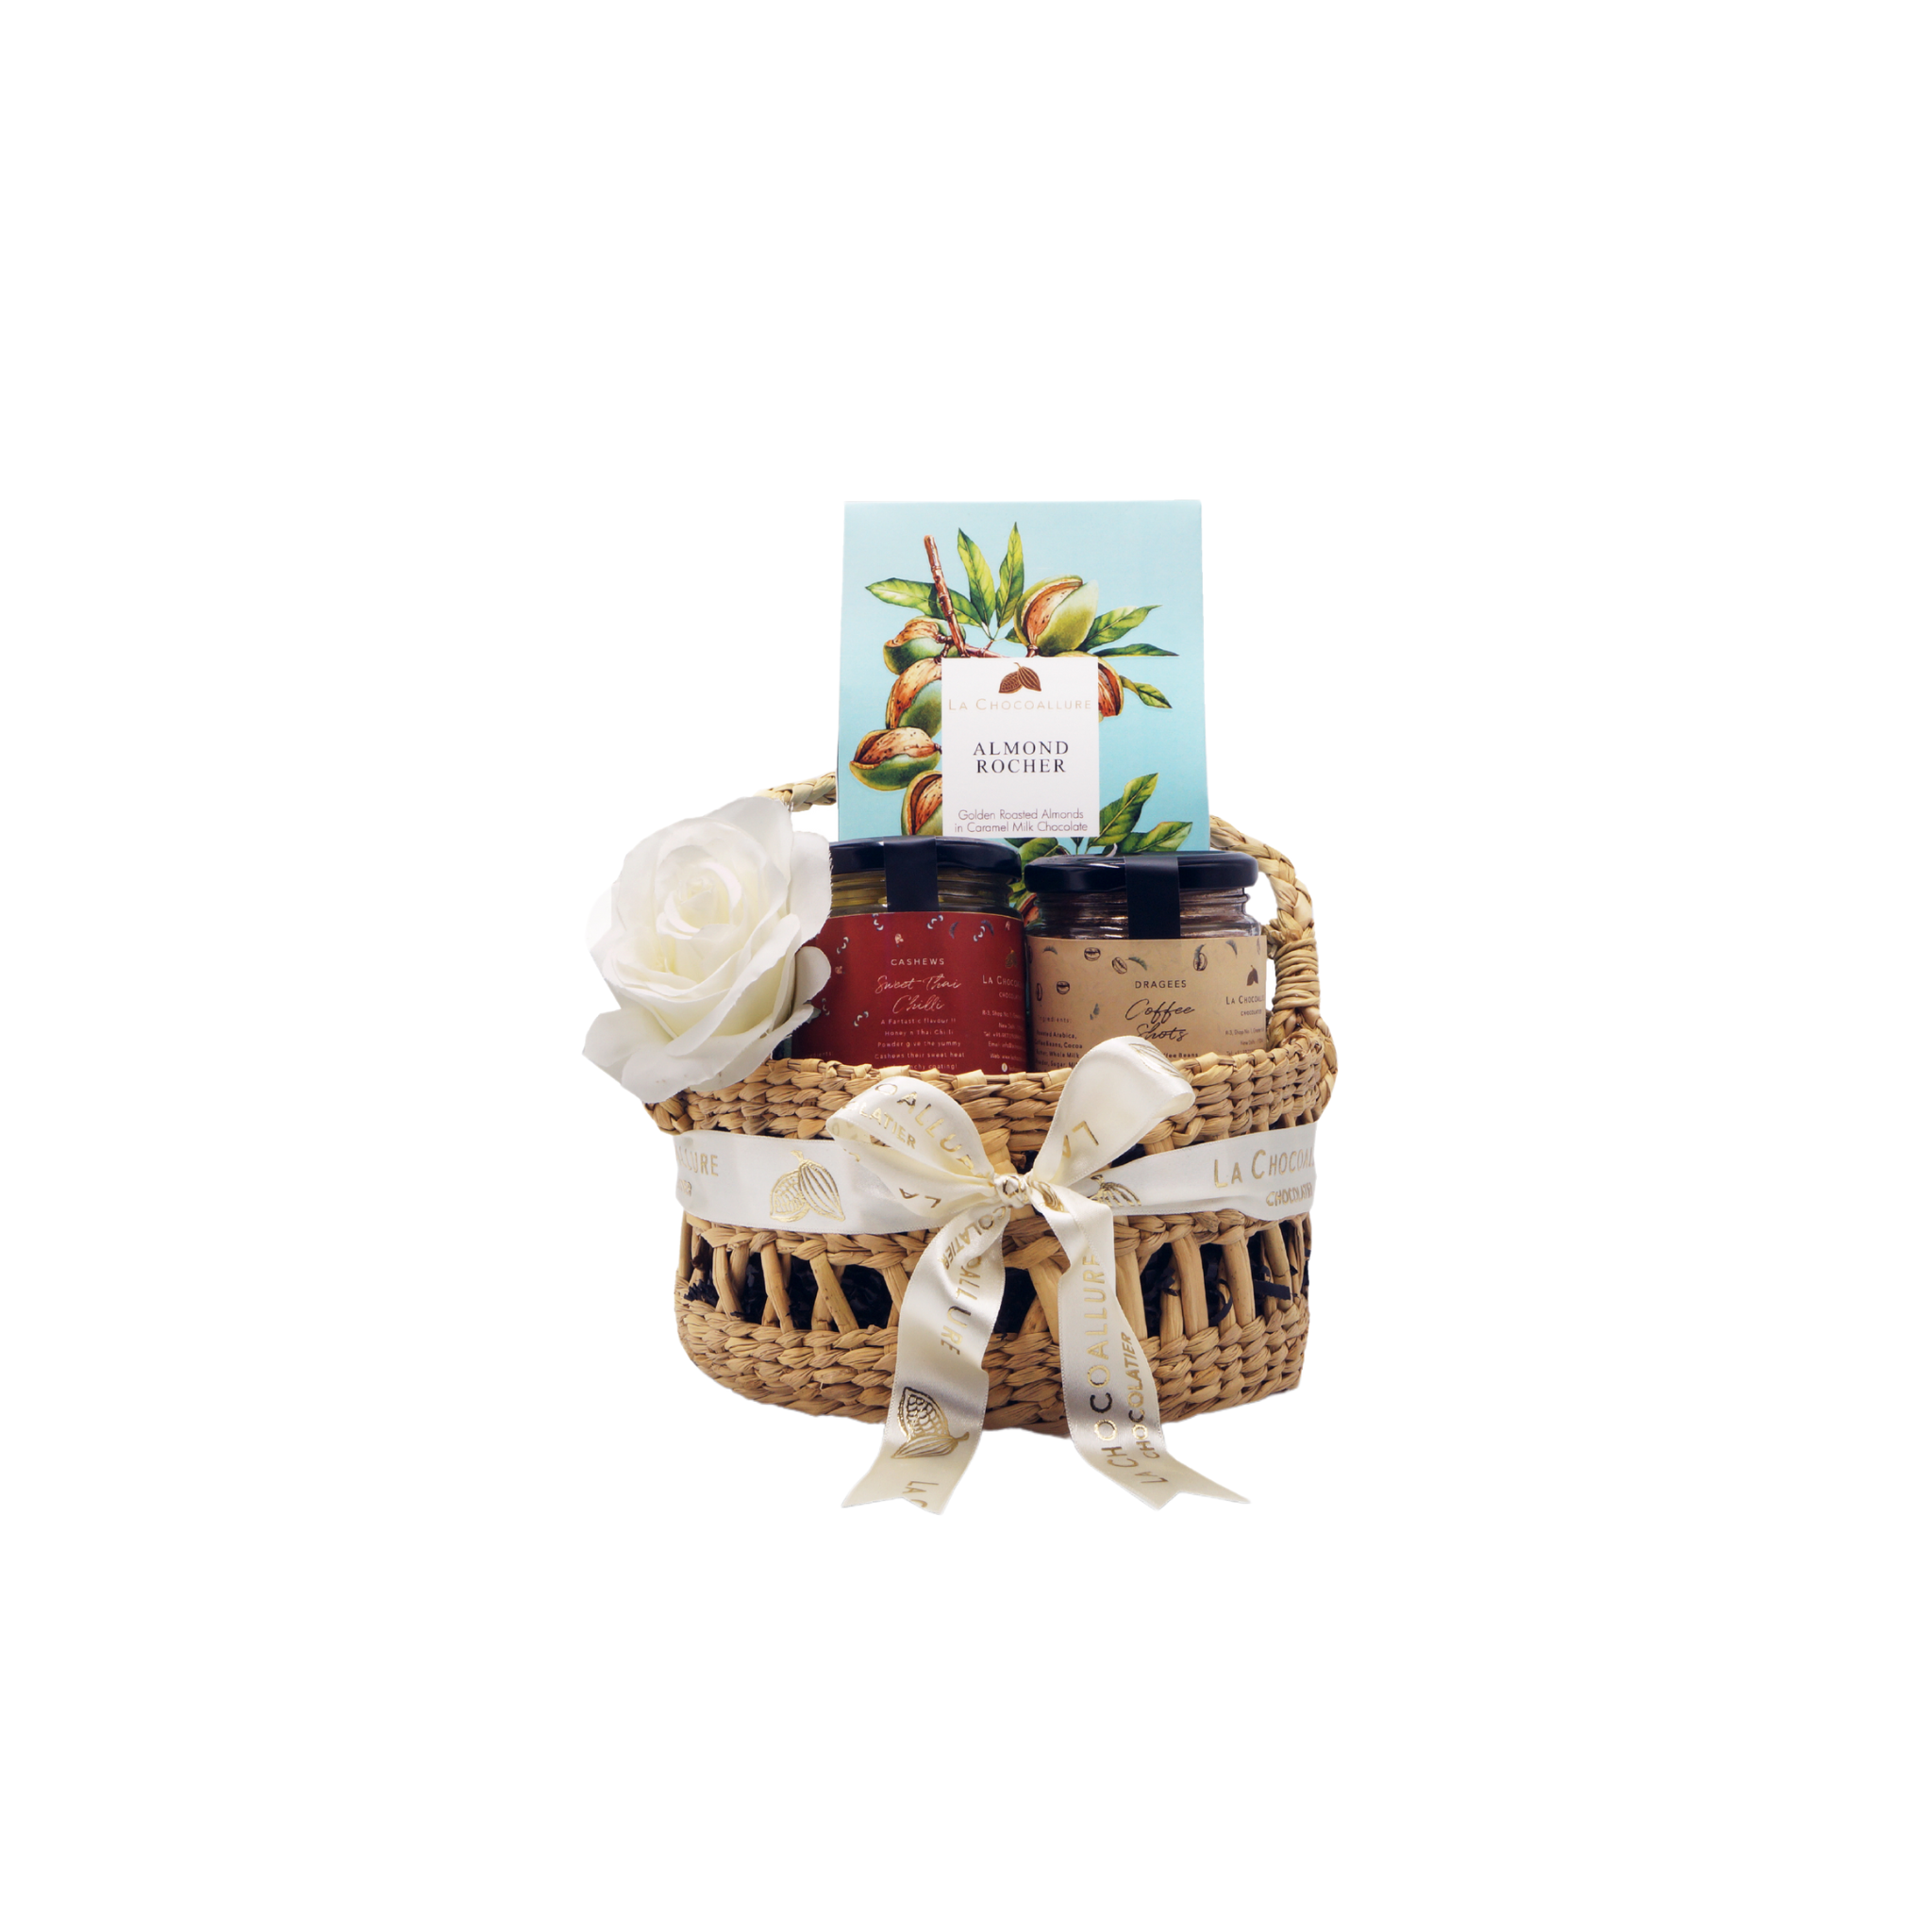 GOURMET BASKET Gift Basket in Houma, LA - Hearts Desire Managed by